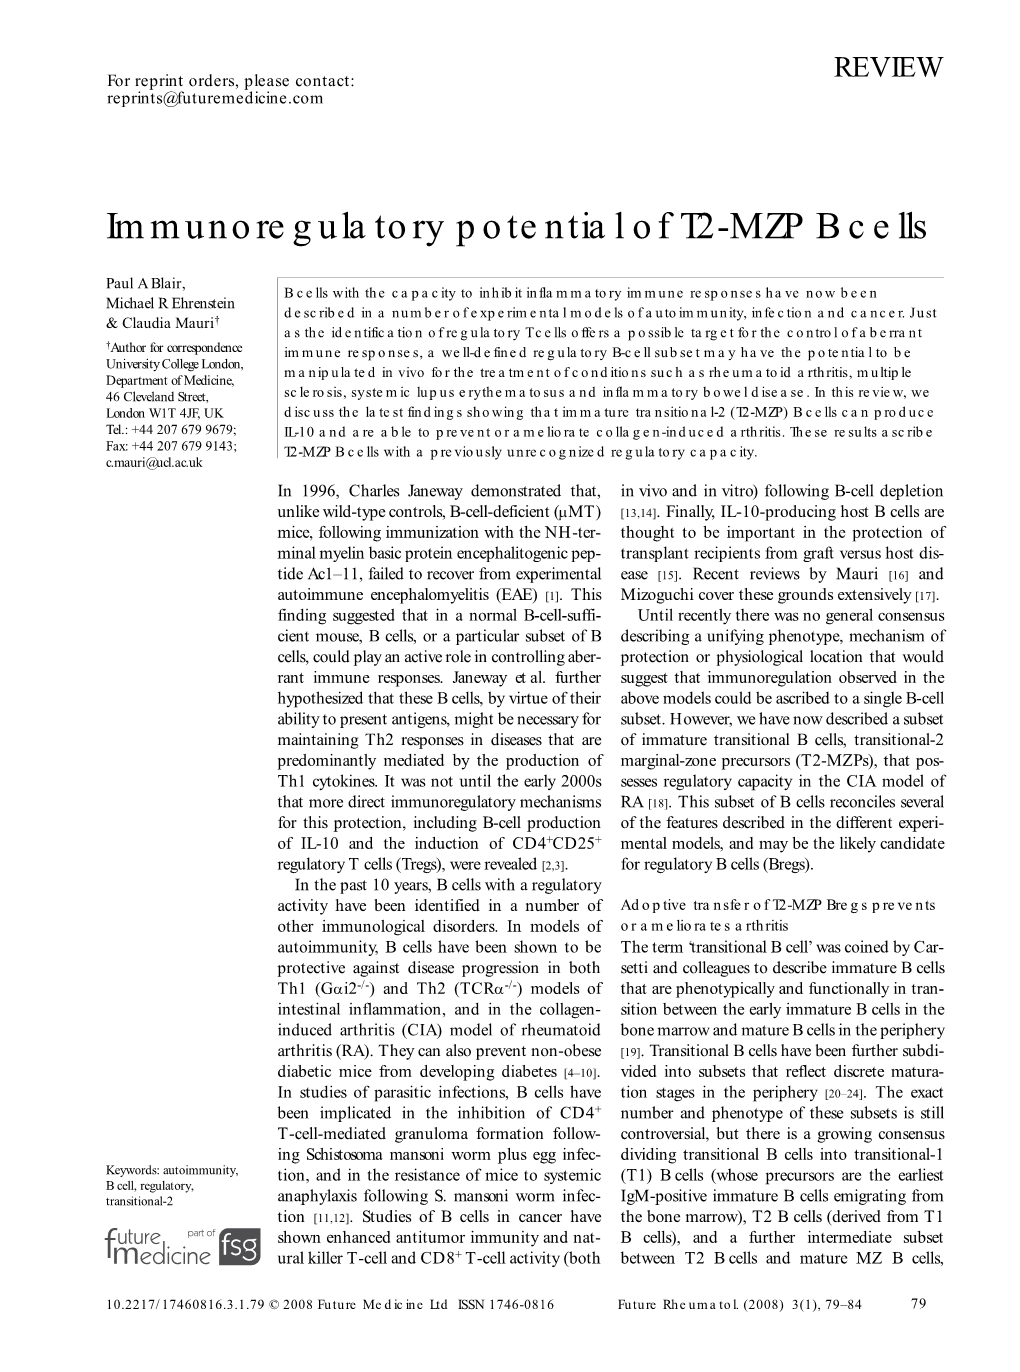 Immunoregulatory Potential of T2-MZP B Cells